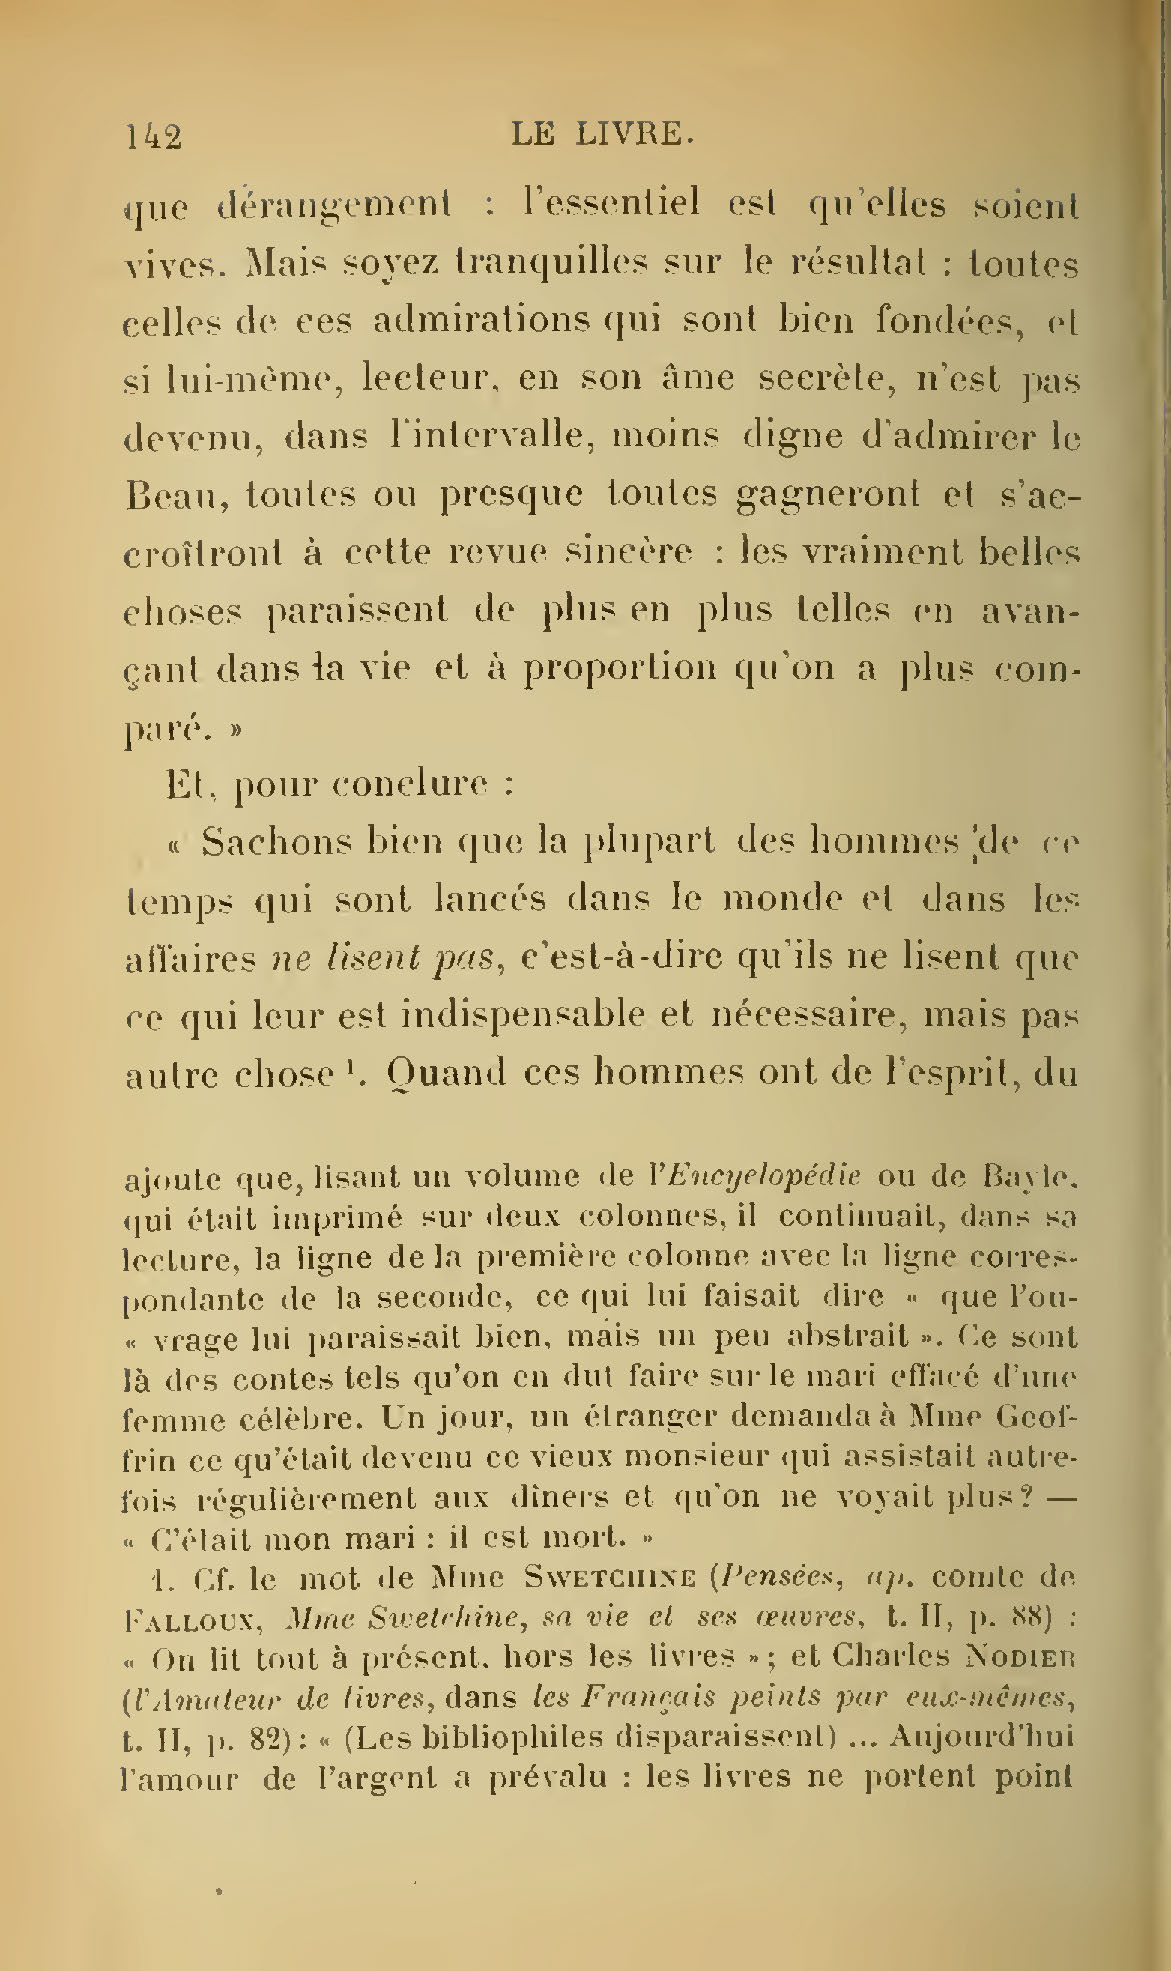 Albert Cim, Le Livre, t. II, p. 142.